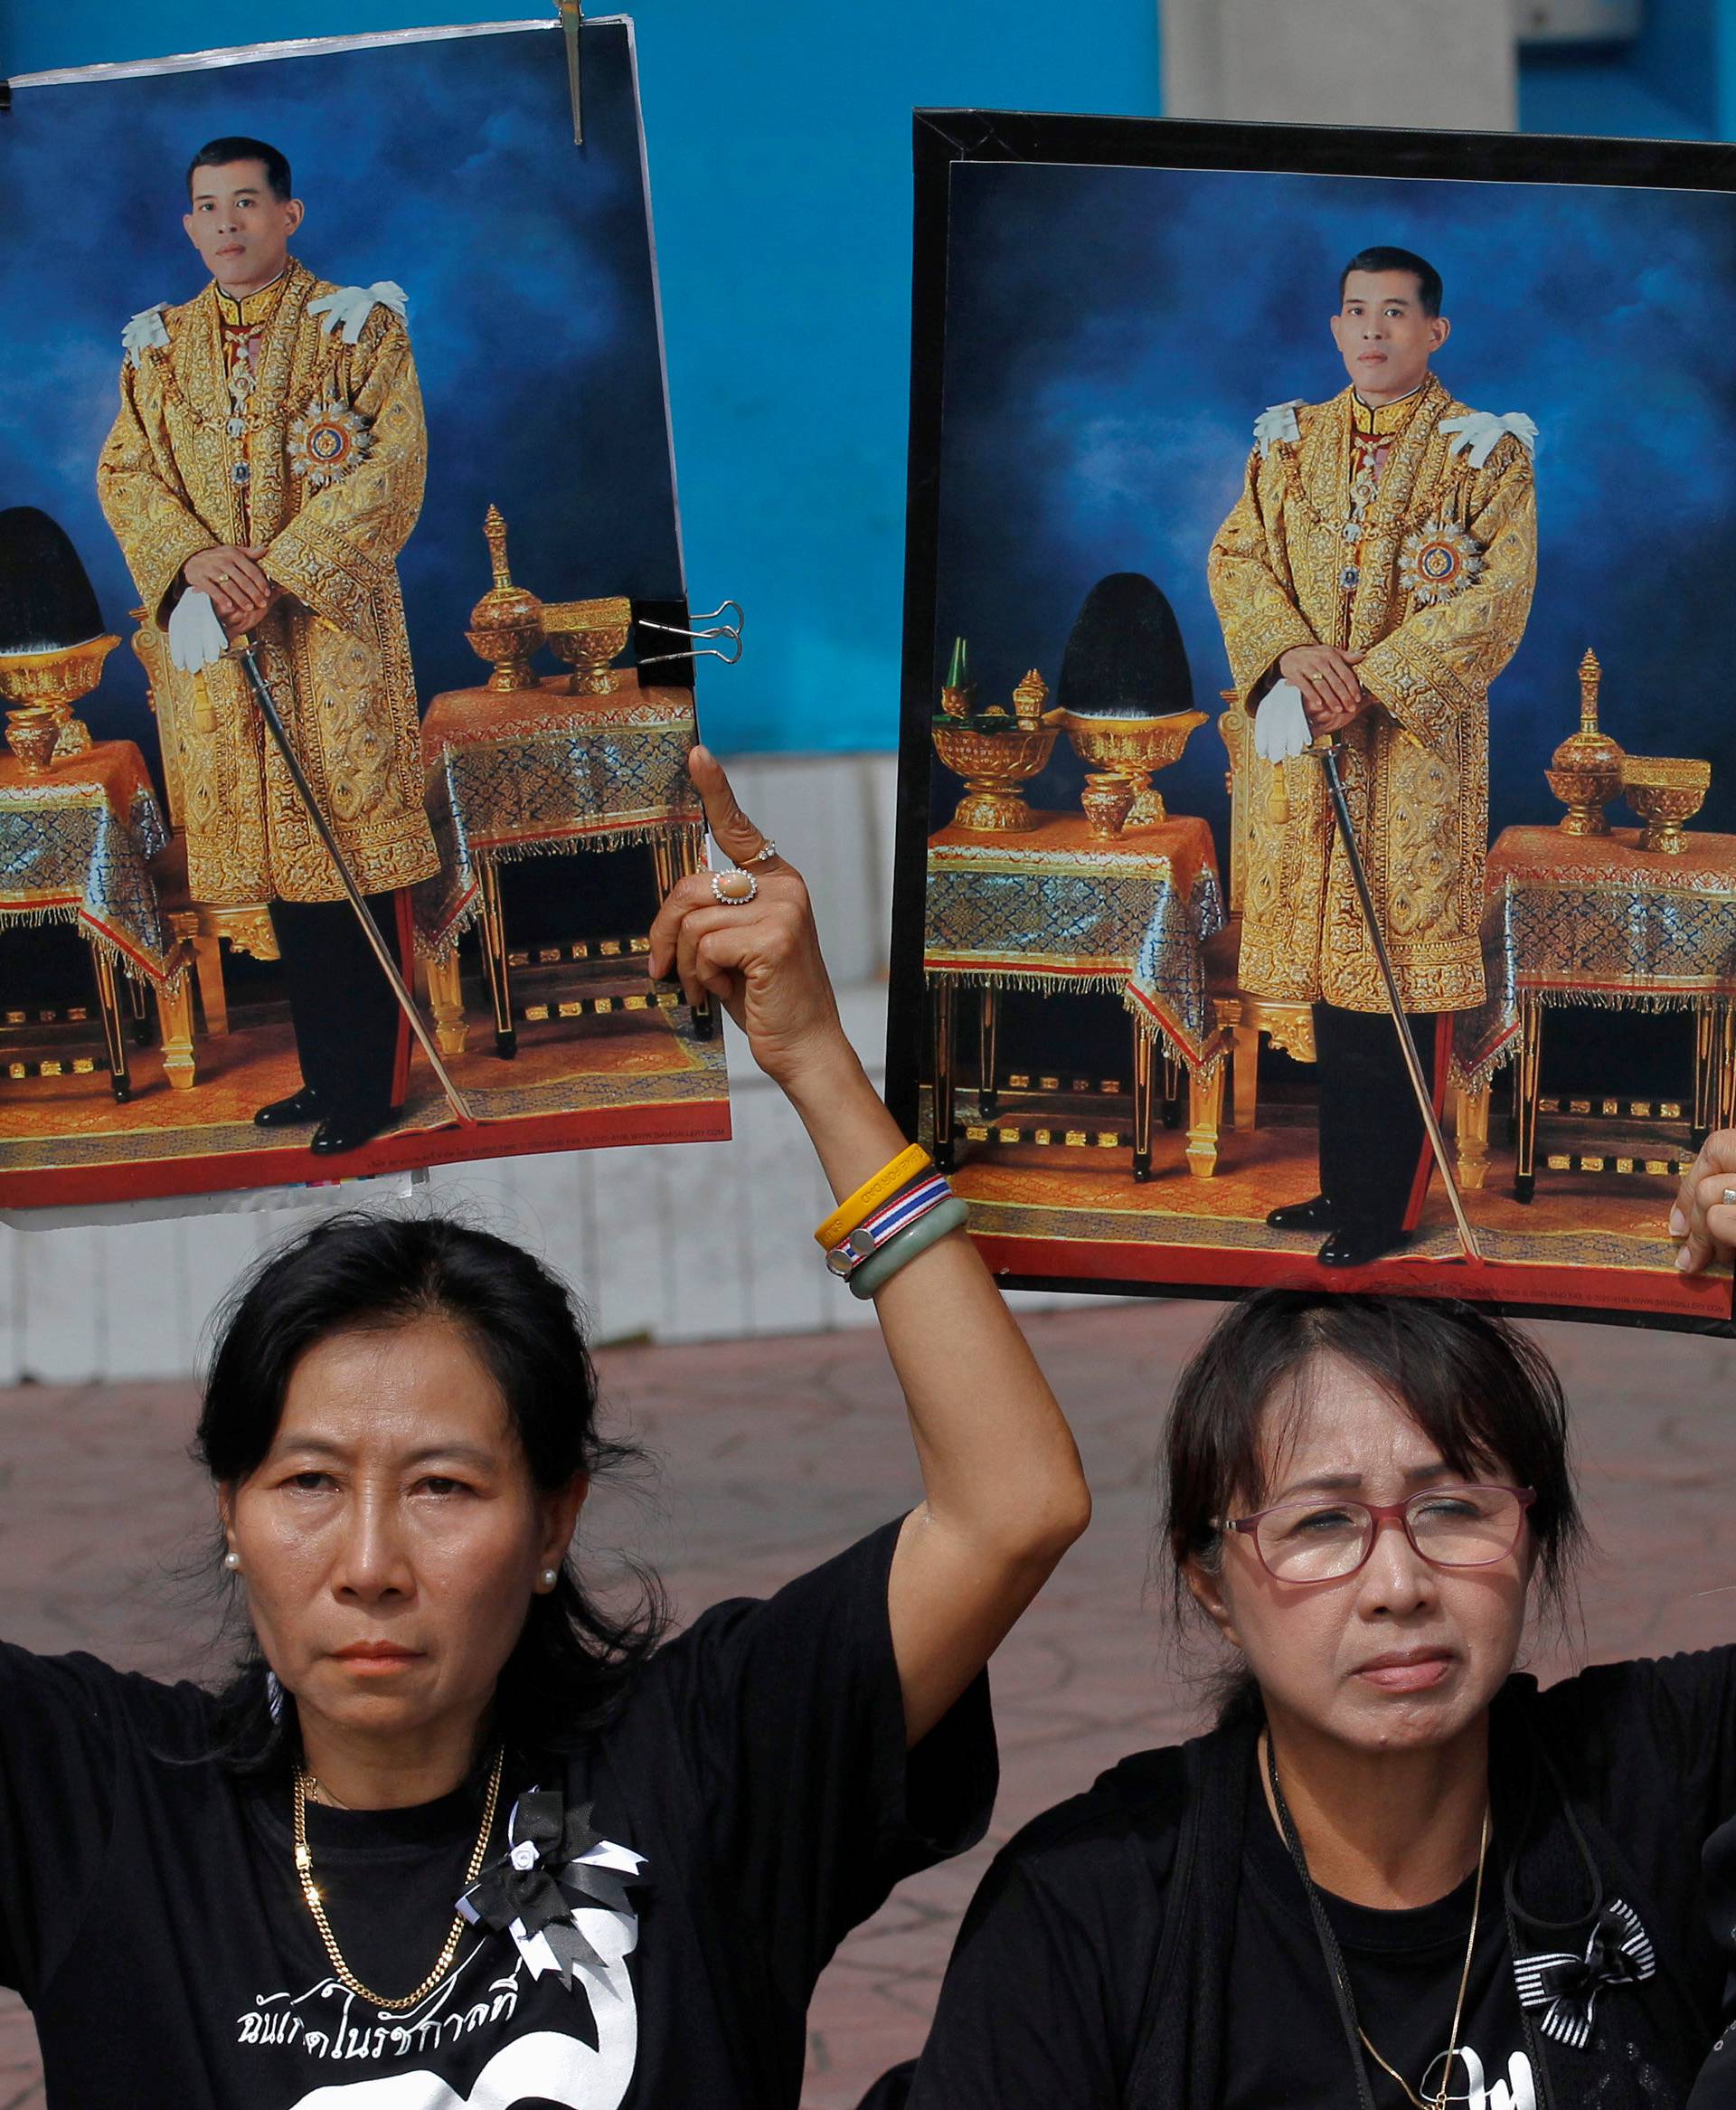 Well-wishers hold up pictures of Thailand's new King Maha Vajiralongkorn Bodindradebayavarangkun before he leaves the Grand Palace in Bangkok, Thailand